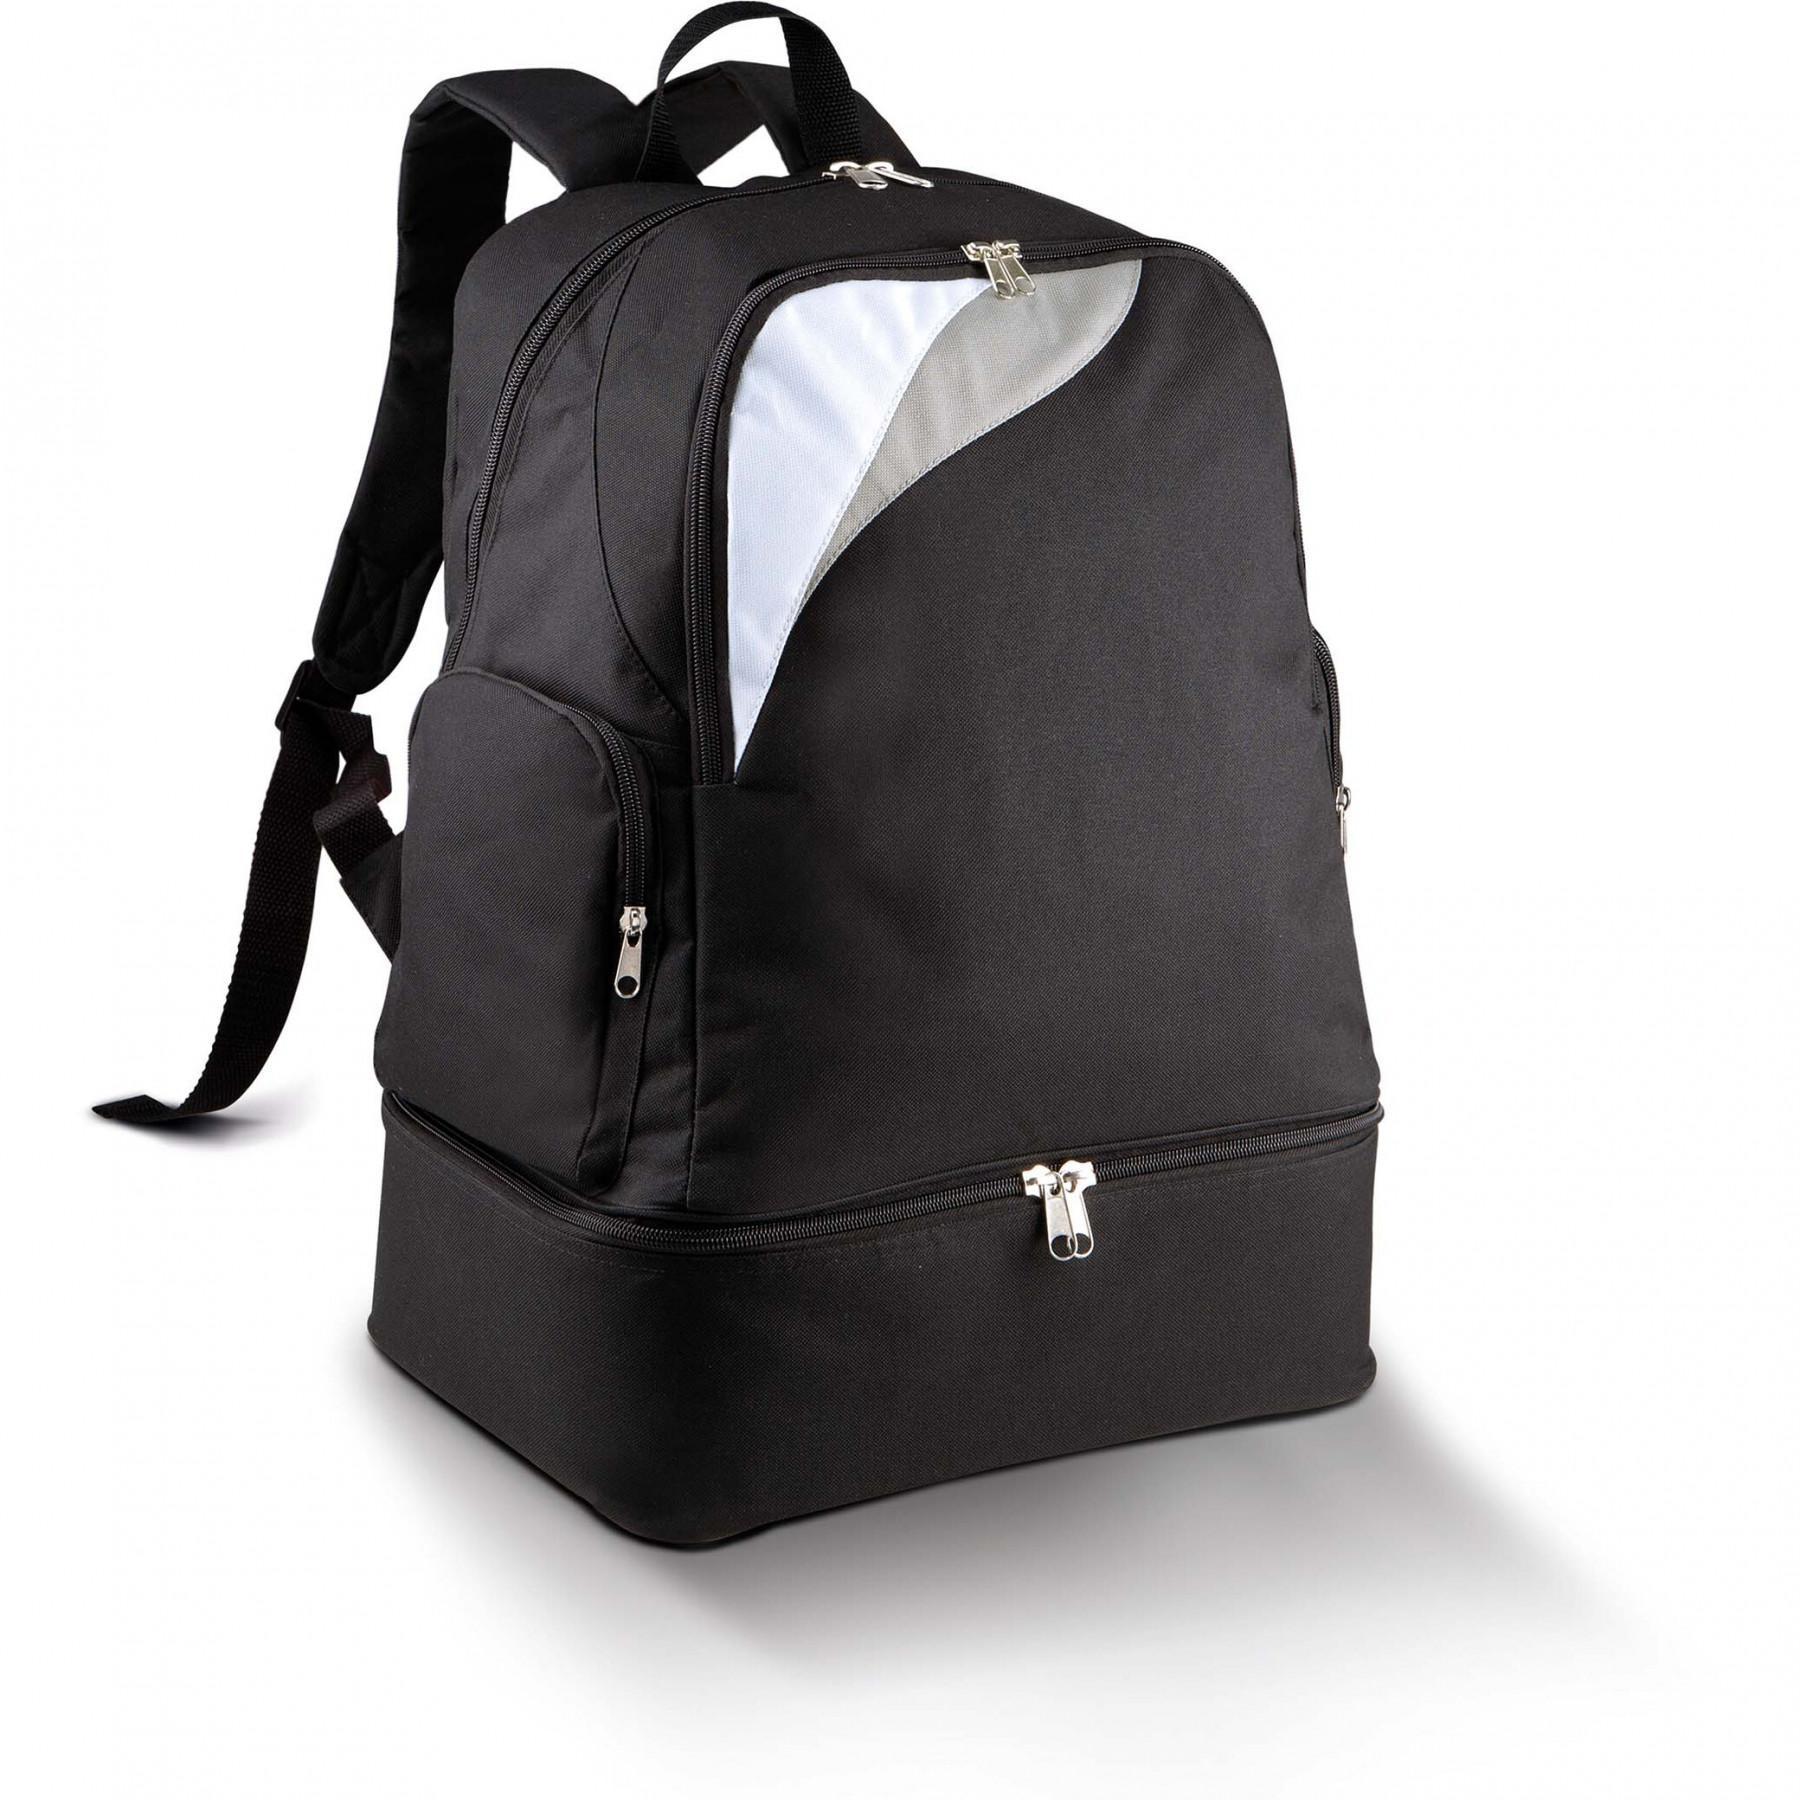 Poract Multisport Backpack